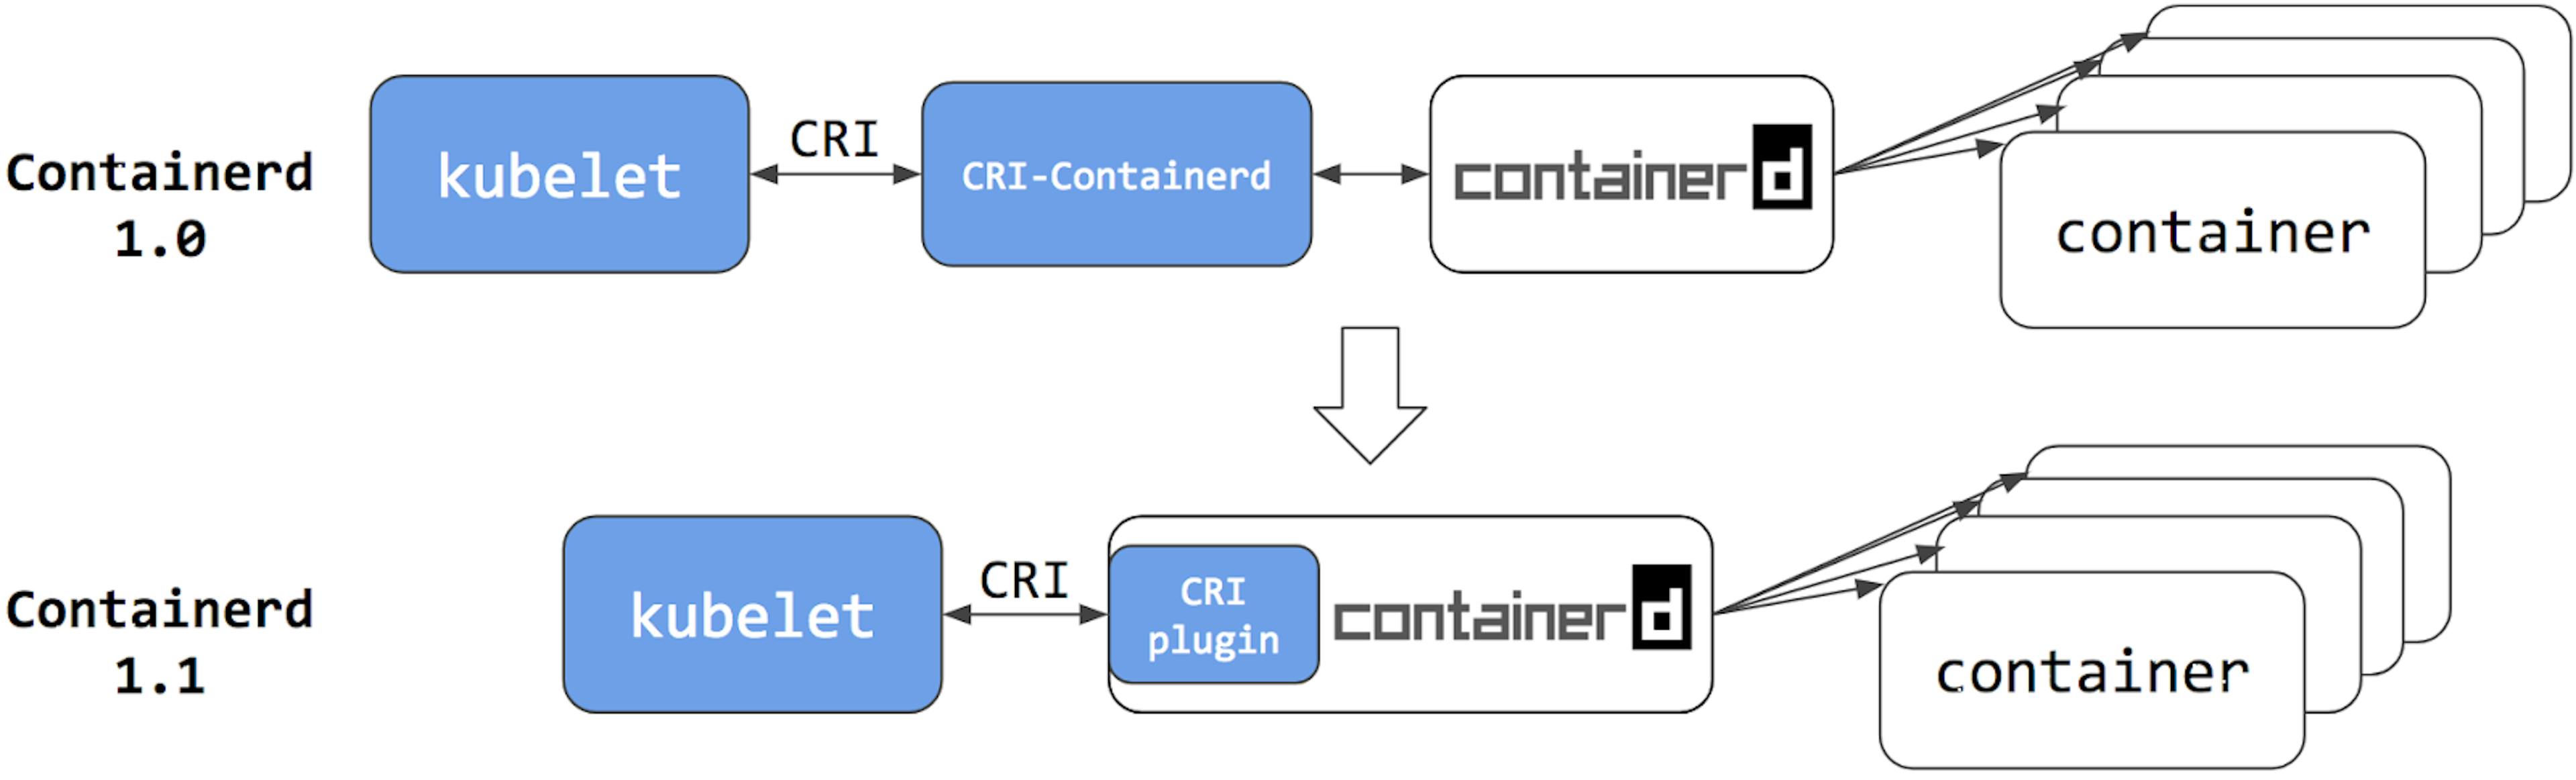 CRI diagram from https://kubernetes.io/blog/2018/05/24/kubernetes-containerd-integration-goes-ga/